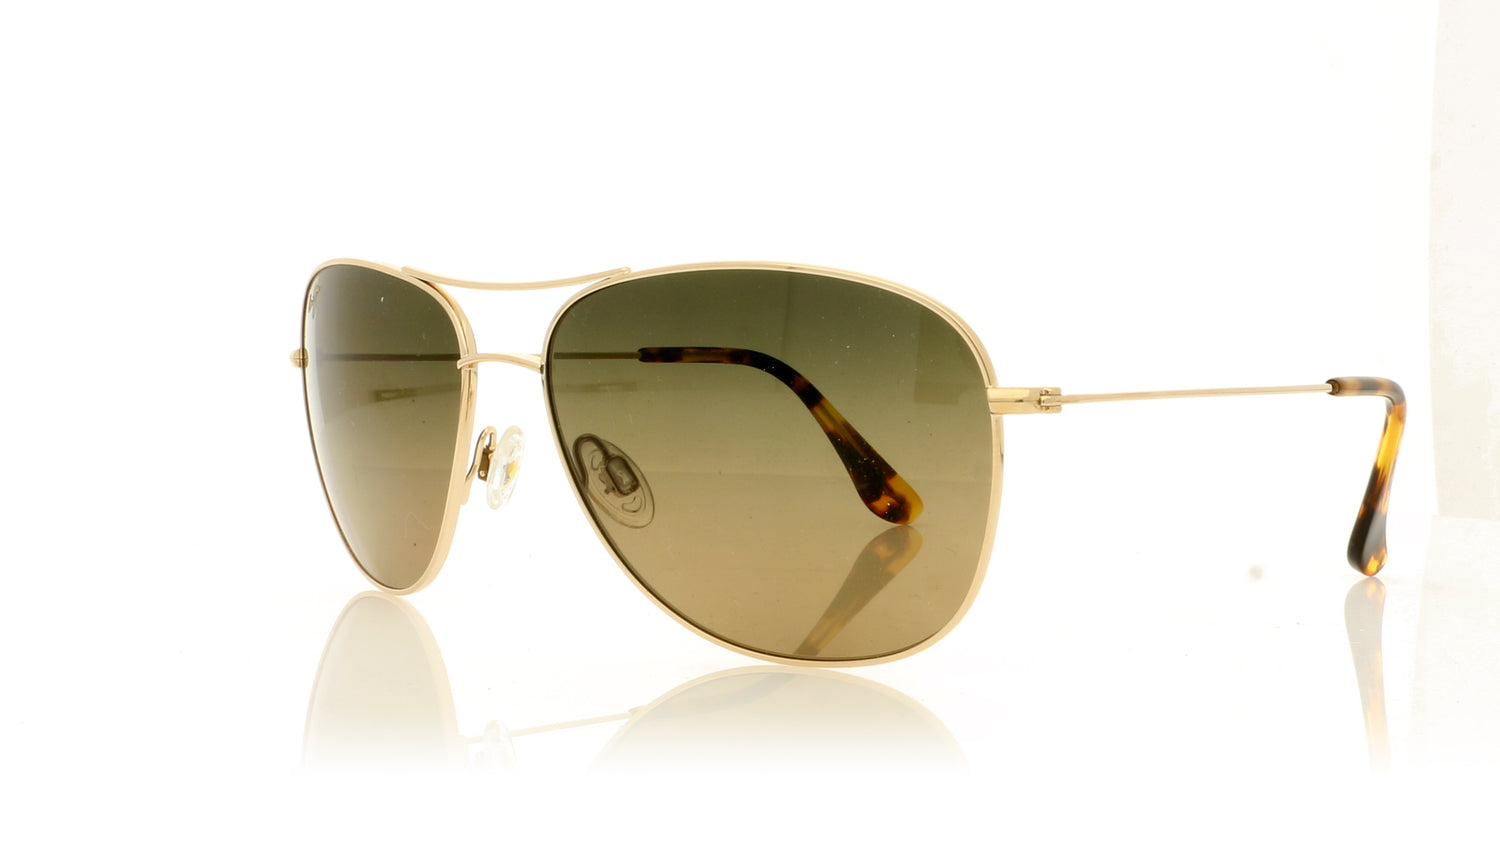 Maui Jim MJ247 16 Mj Gold Sunglasses - Angle